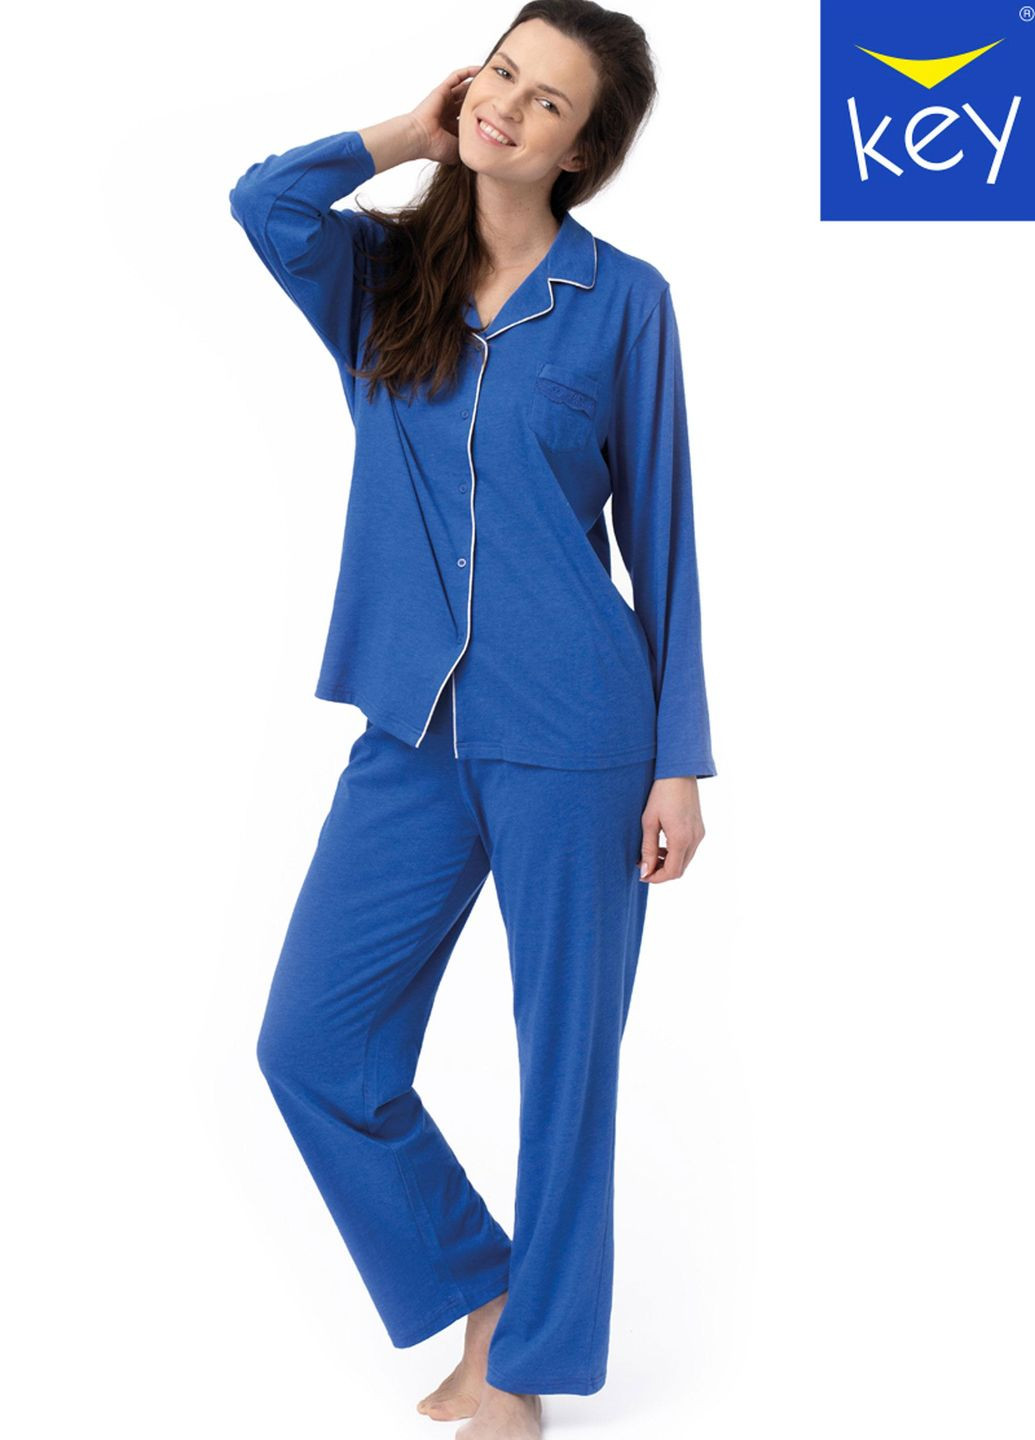 Синяя пижама женская l синяя lns 266 b23 Key